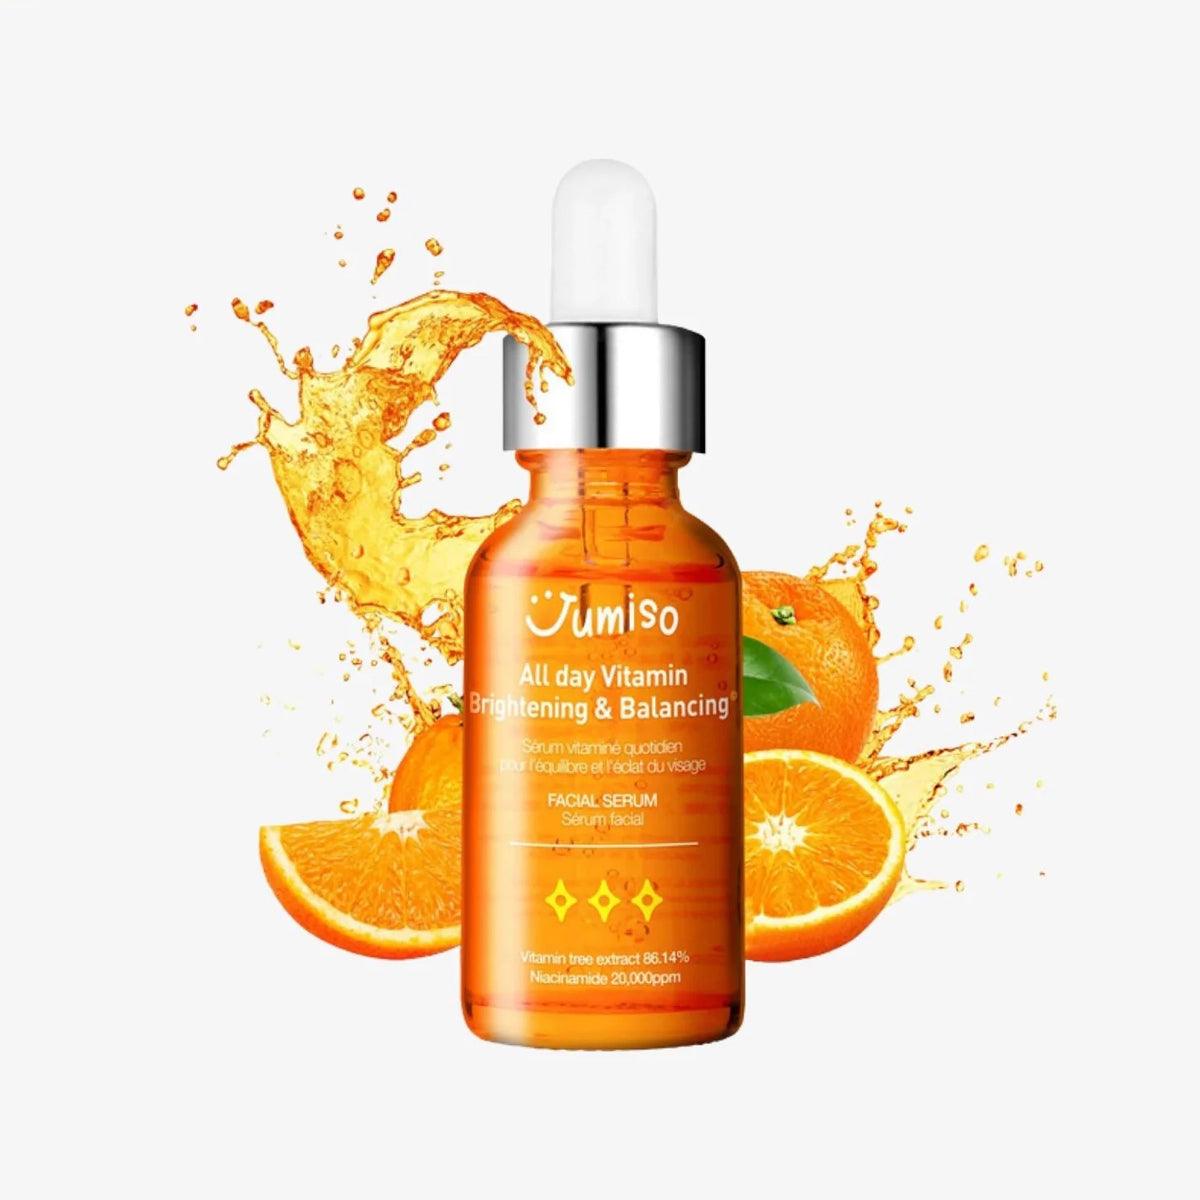 All Day Vitamin Brightening & Balancing Facial Serum - 30 ml - K-Beauty Arabia